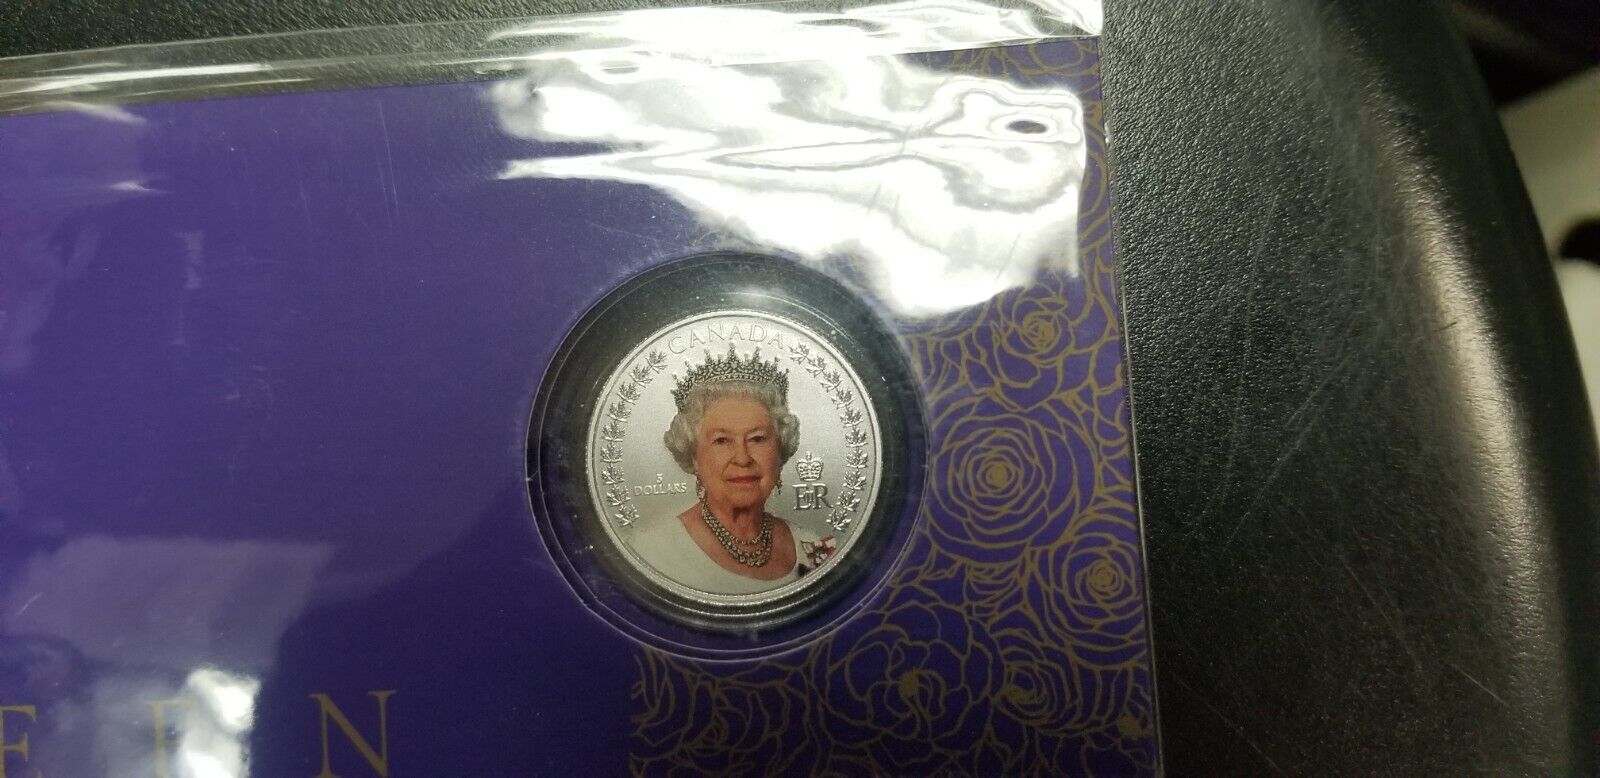 Canada 2022 Coloured $5 Silver Coin A Portrait Of Queen Elizabeth II Legacy. 